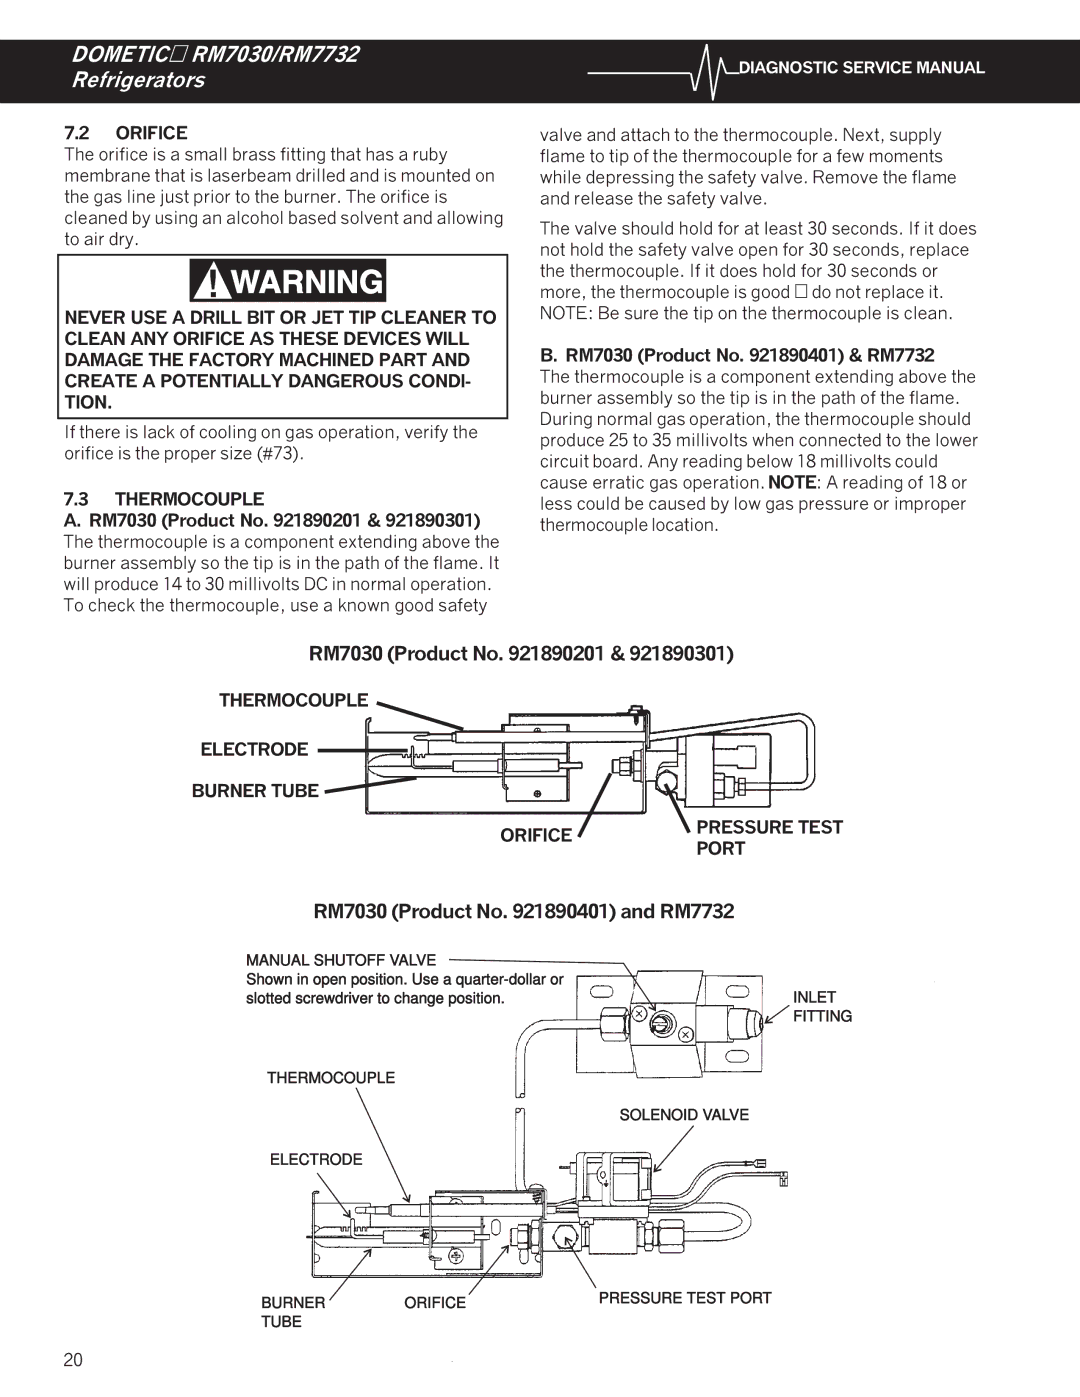 Dometic RM7030, RM7732 service manual Orifice, Thermocouple 